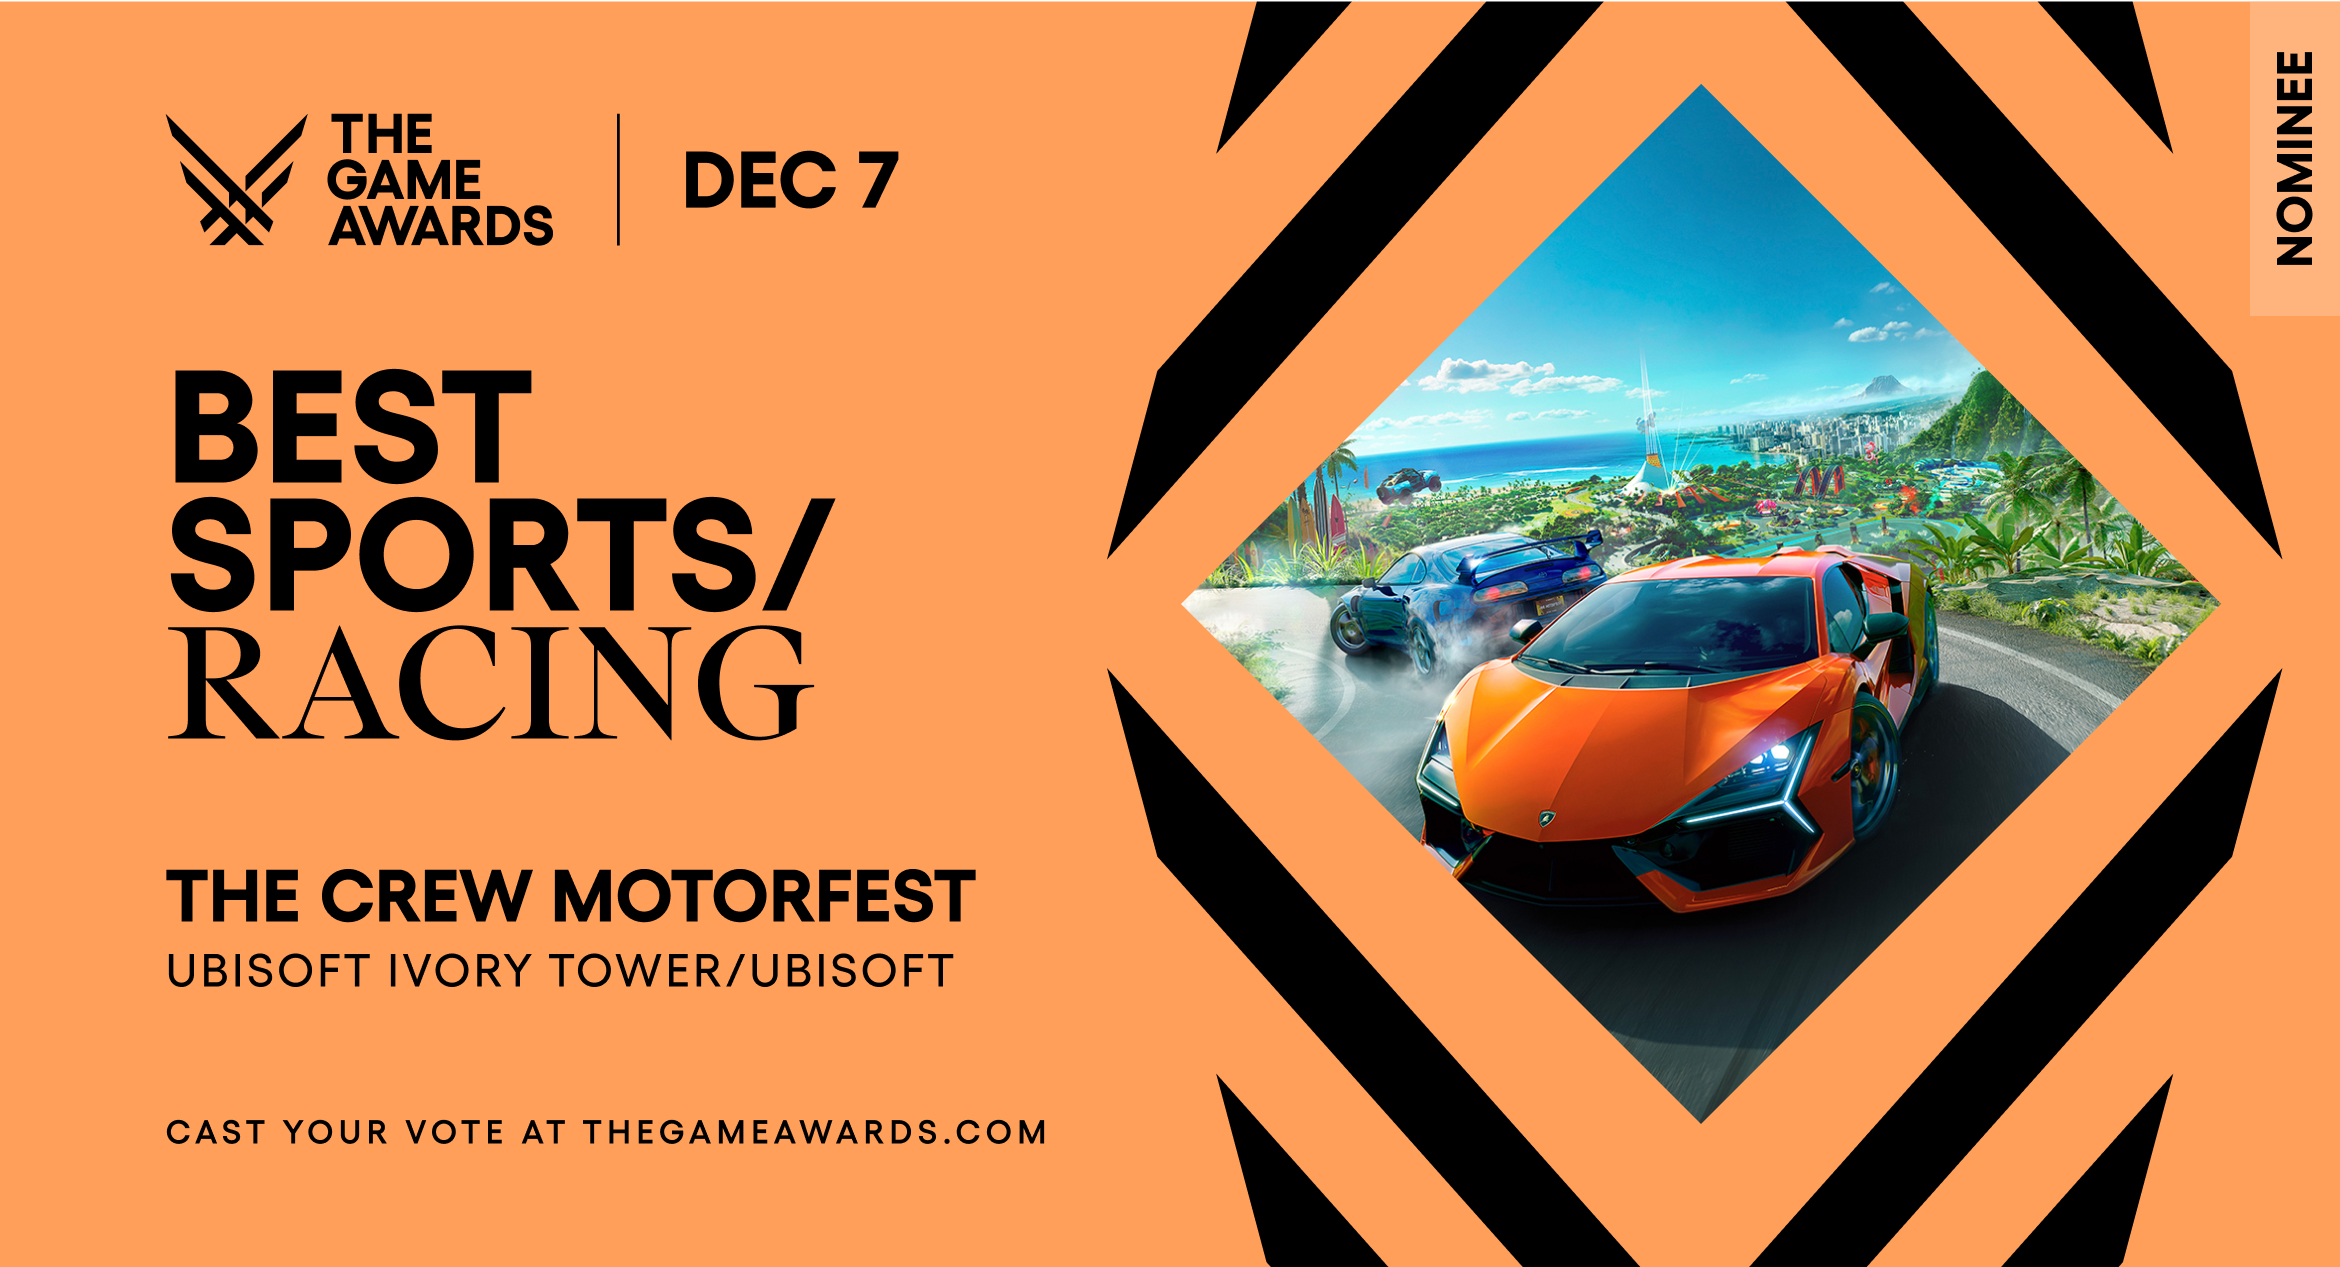 Ubisoft Celebrates The Crew Motorfest's Best Ever Franchise Launch